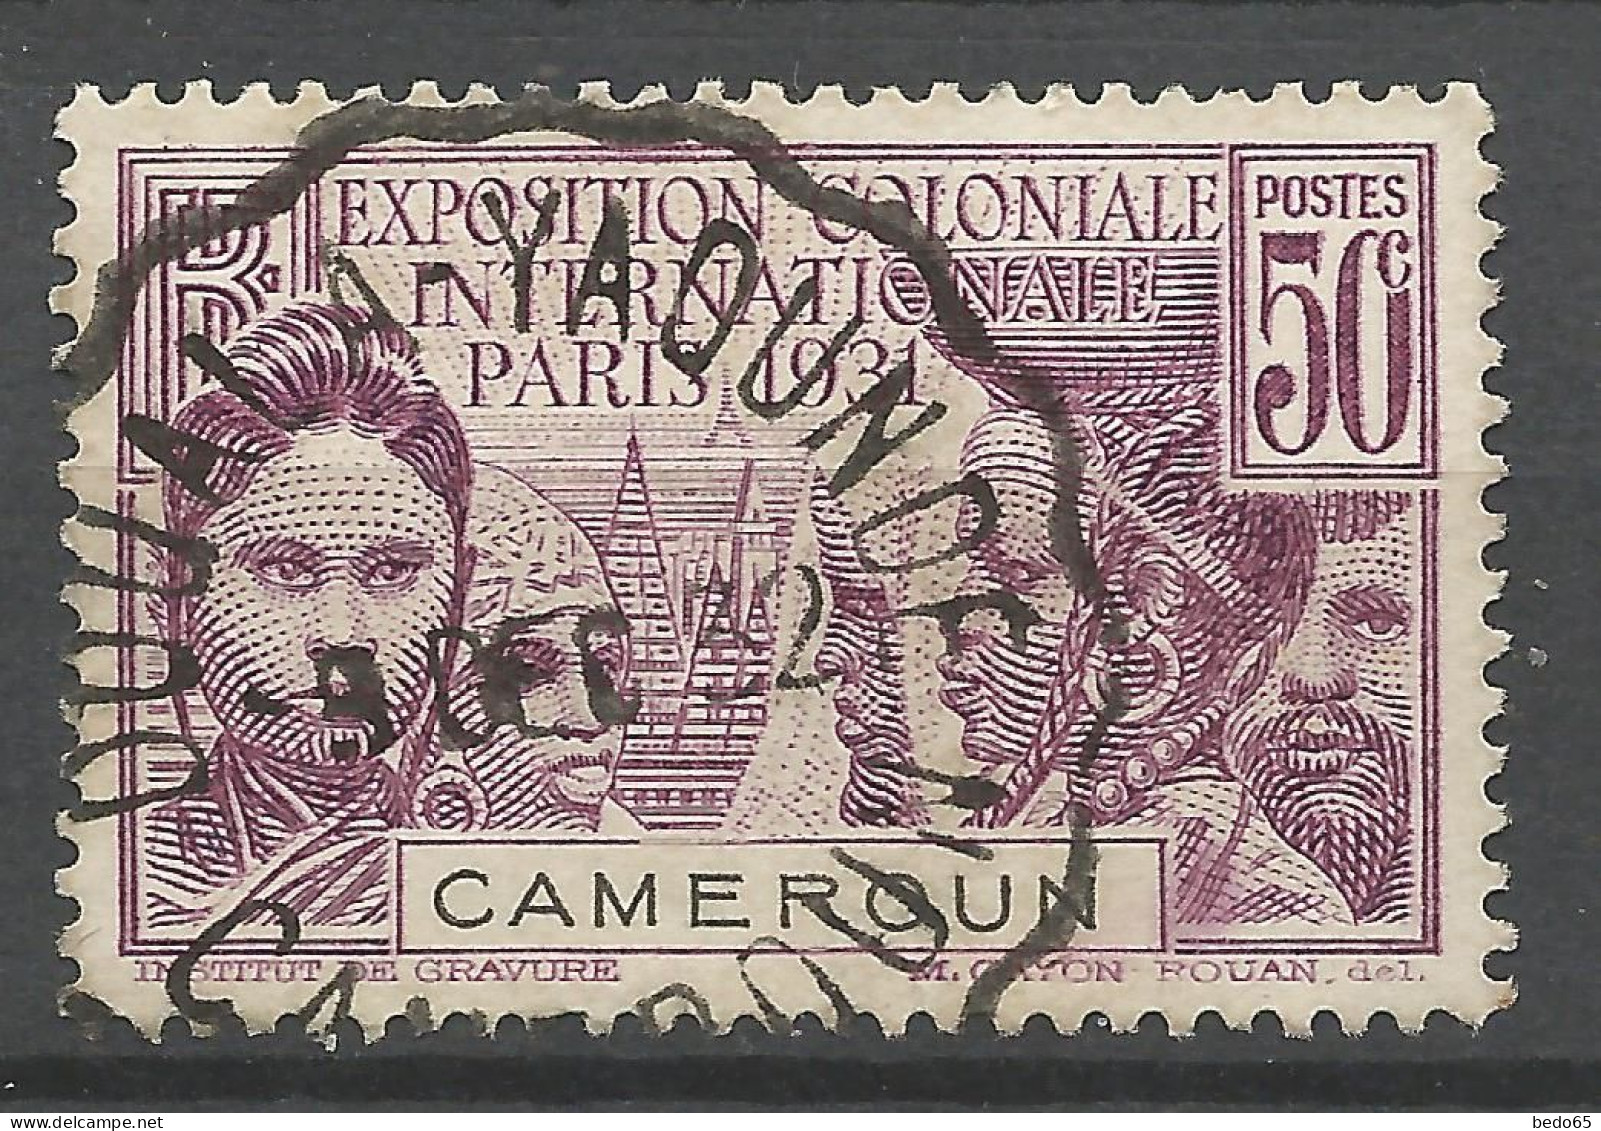 CAMEROUN N° 150 CACHET AMBULANT DOUALA A YAOUNDE / Used - Used Stamps